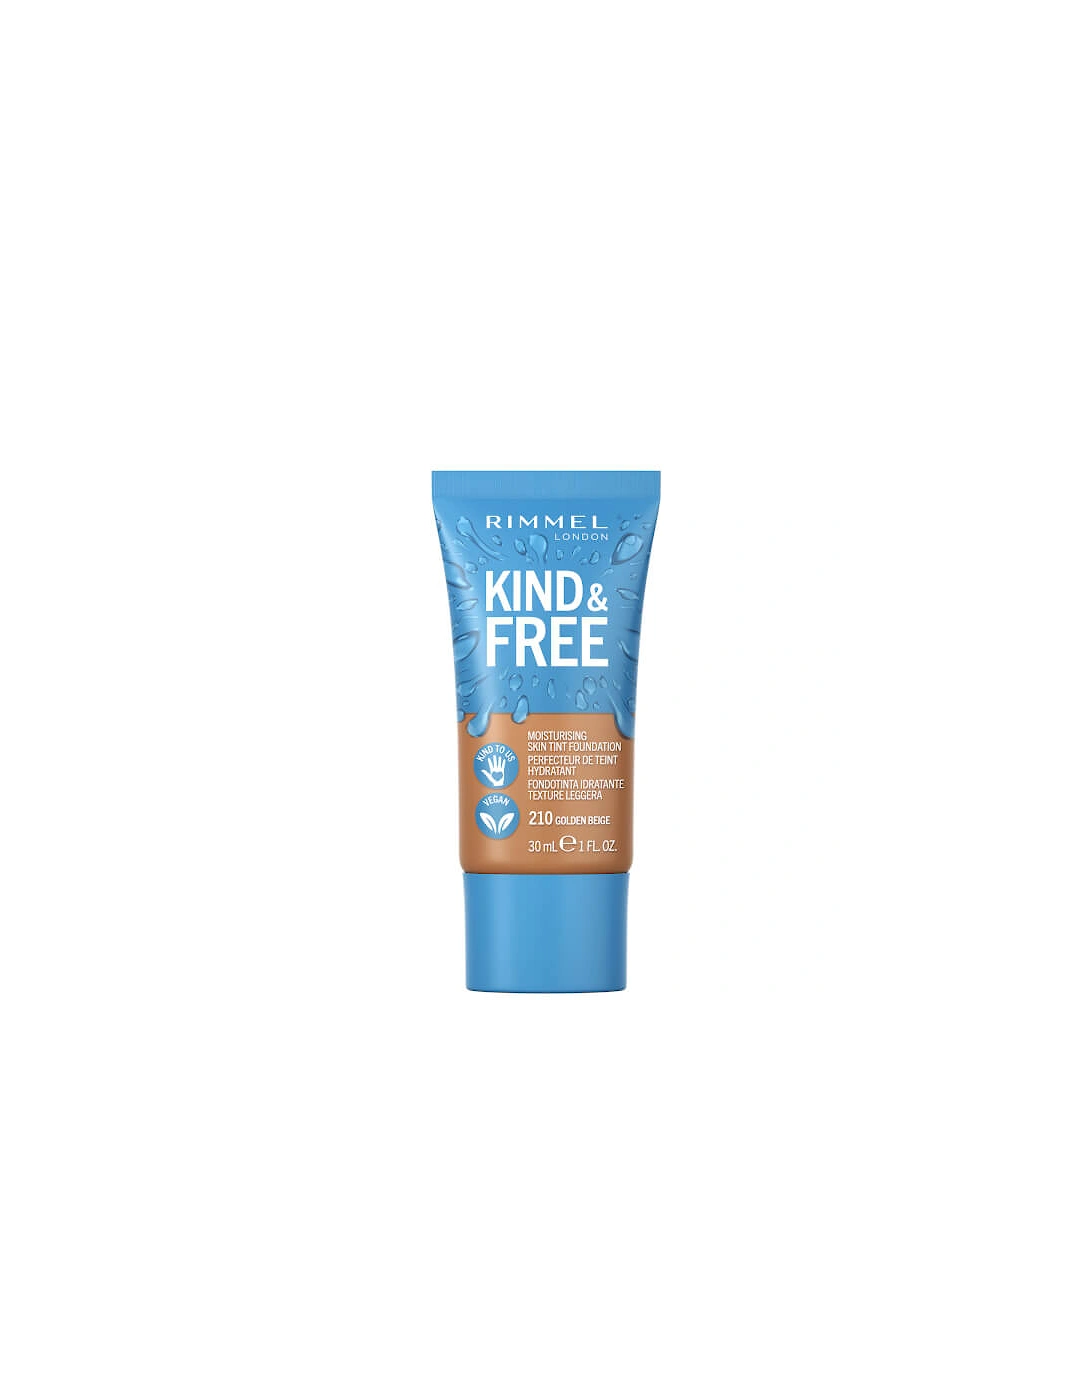 Kind and Free Skin Tint Moisturising Foundation - Golden Beige, 2 of 1